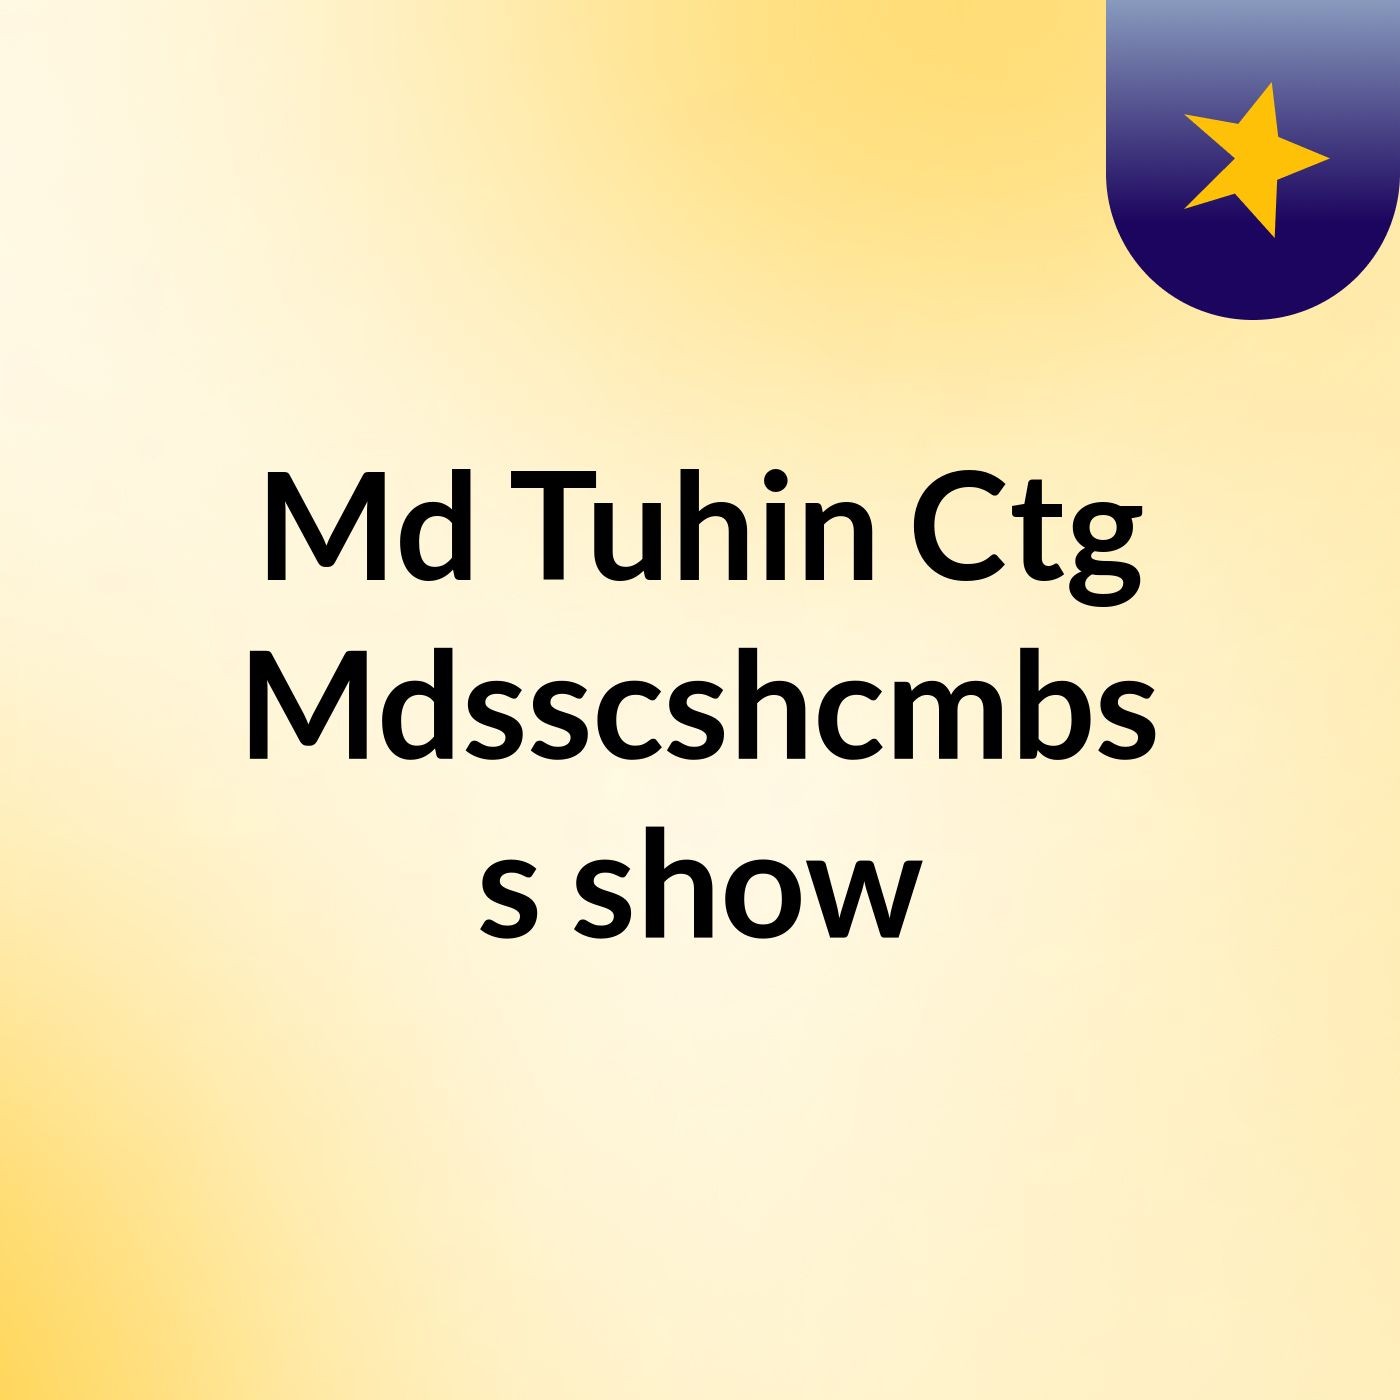 Md Tuhin Ctg Mdsscshcmbs's show